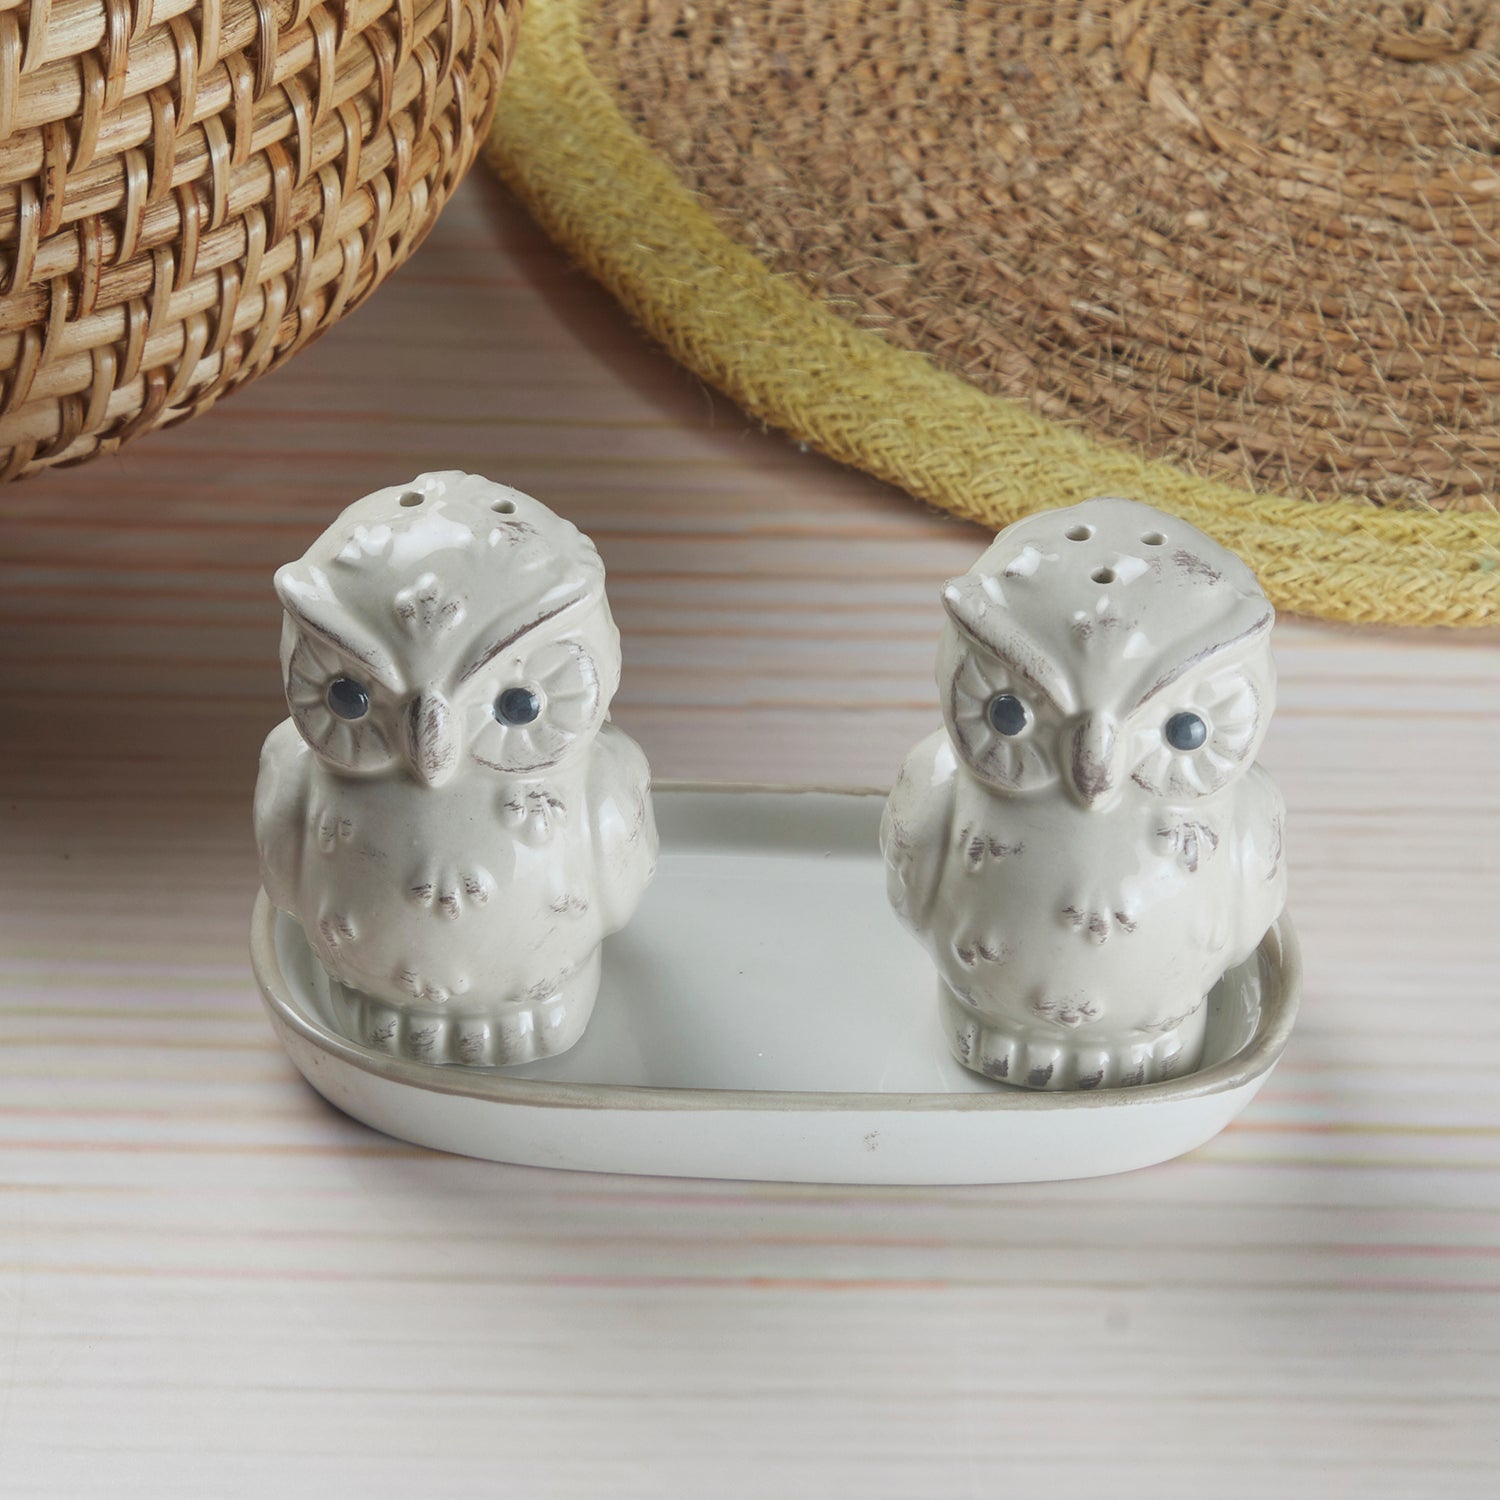 Ceramic Salt and Pepper Set with tray, Owl Design, Light Brown